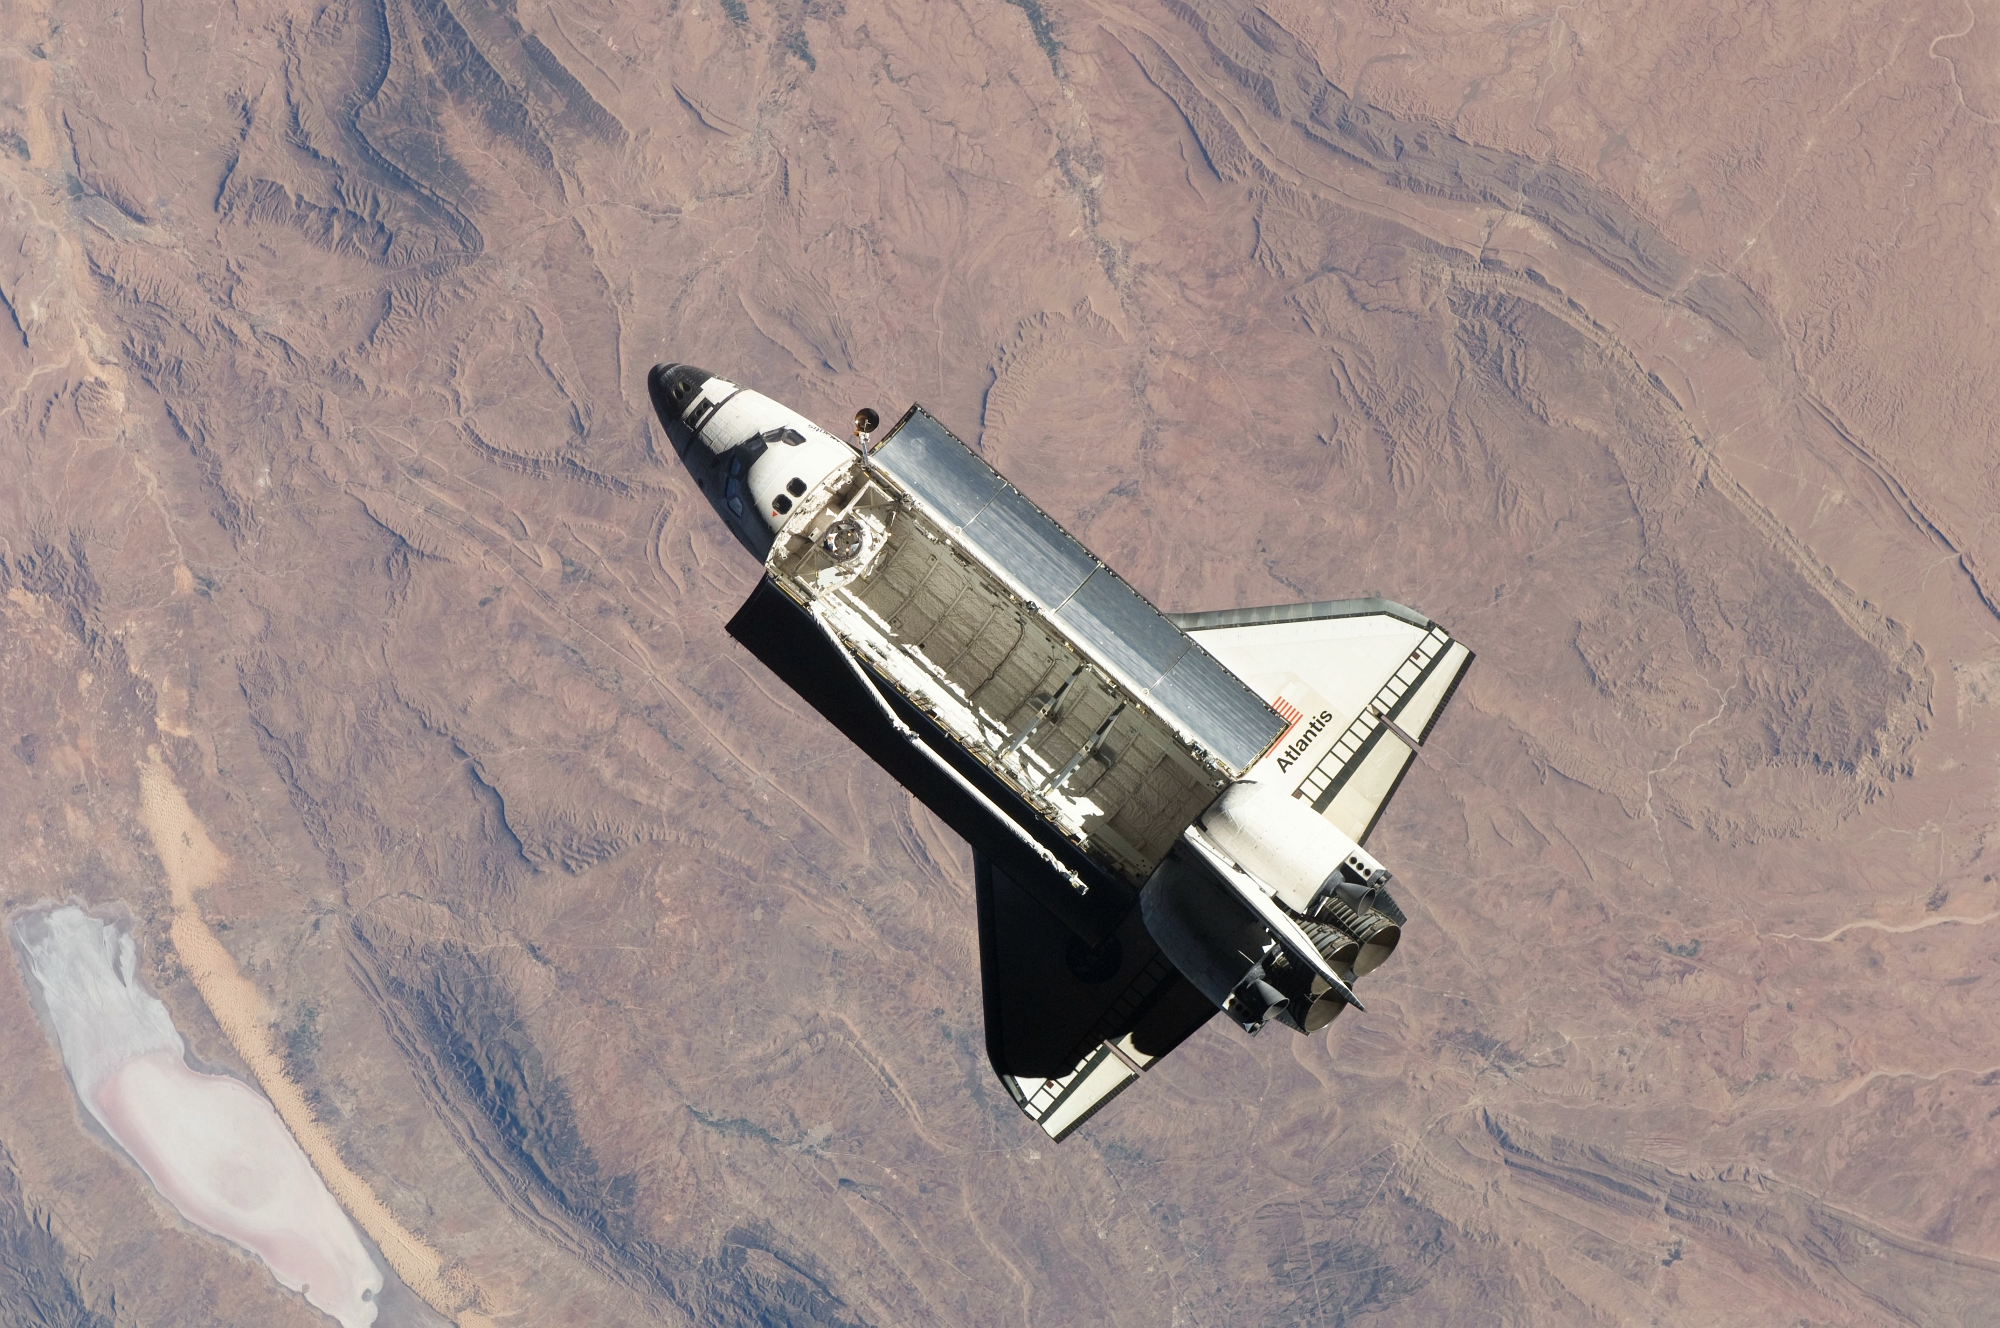 1. Space Shuttle Atlantis (STS-129) high above rugged terrain, 25 November 2009